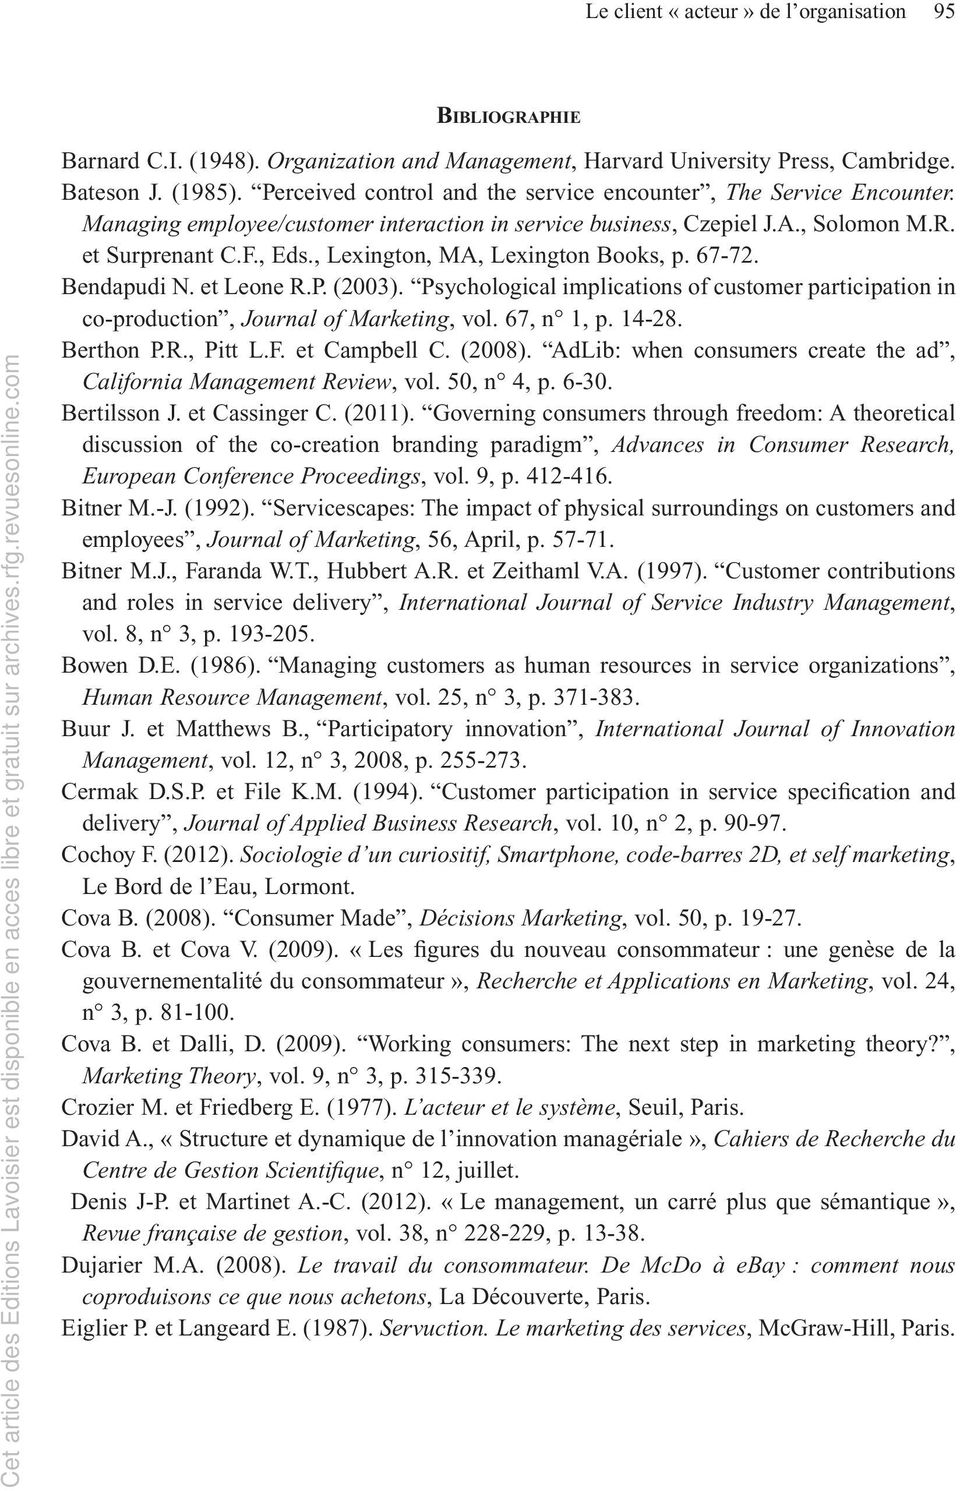 , Lexington, MA, Lexington Books, p. 67-72. Bendapudi N. et Leone R.P. (2003). Psychological implications of customer participation in co-production, Journal of Marketing, vol. 67, n 1, p. 14-28.